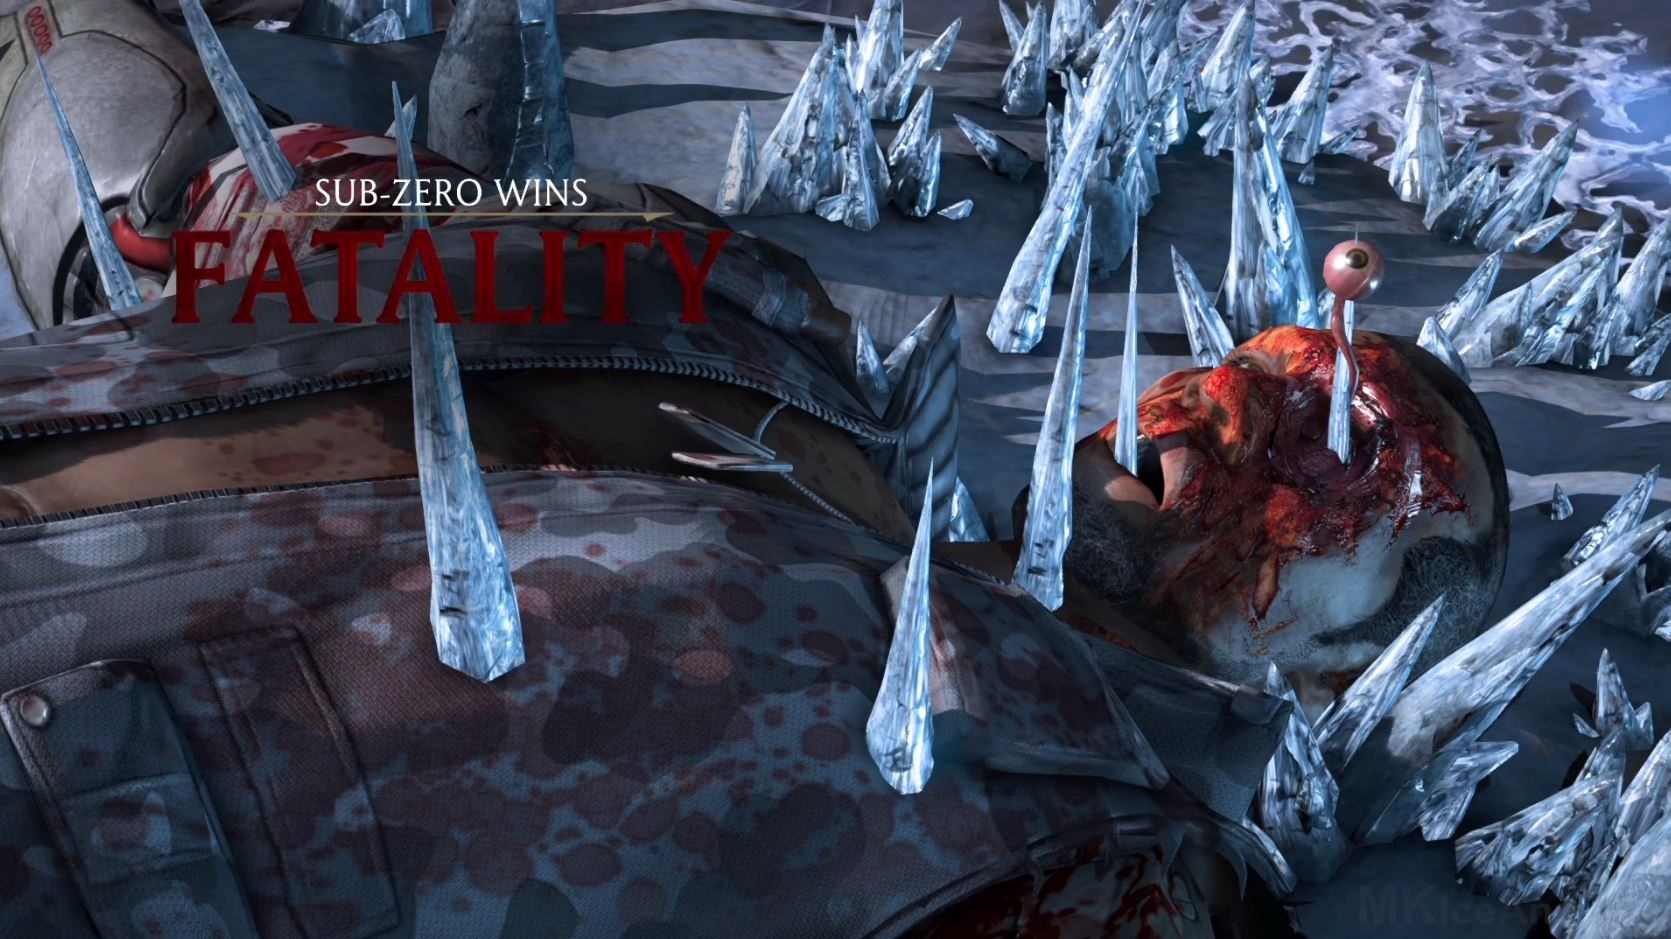 FATALITY: Sub-Zero Wins!